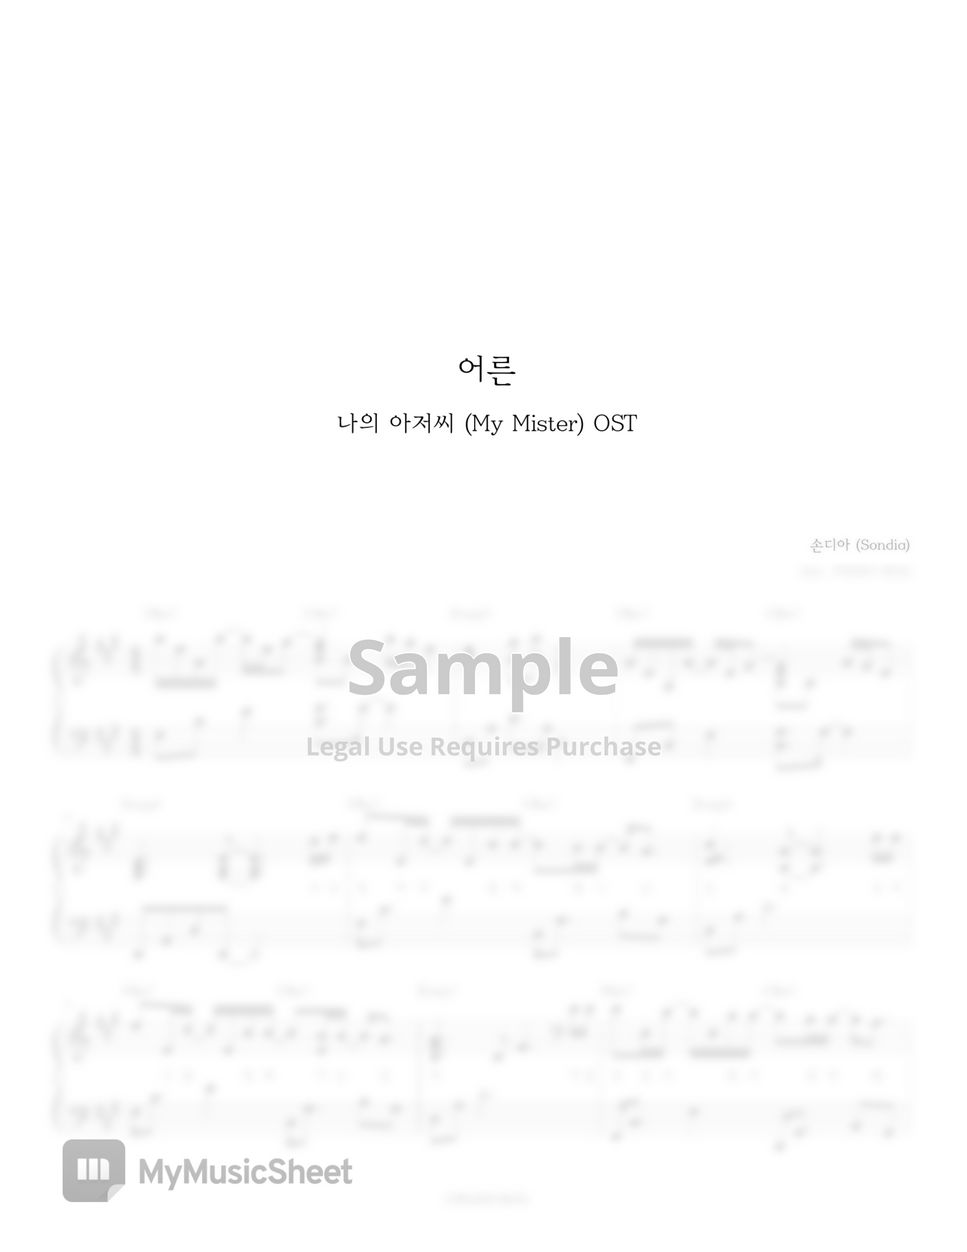 Sondia (손디아) - 어른 (My mister 나의 아저씨 OST) by Piano Hug